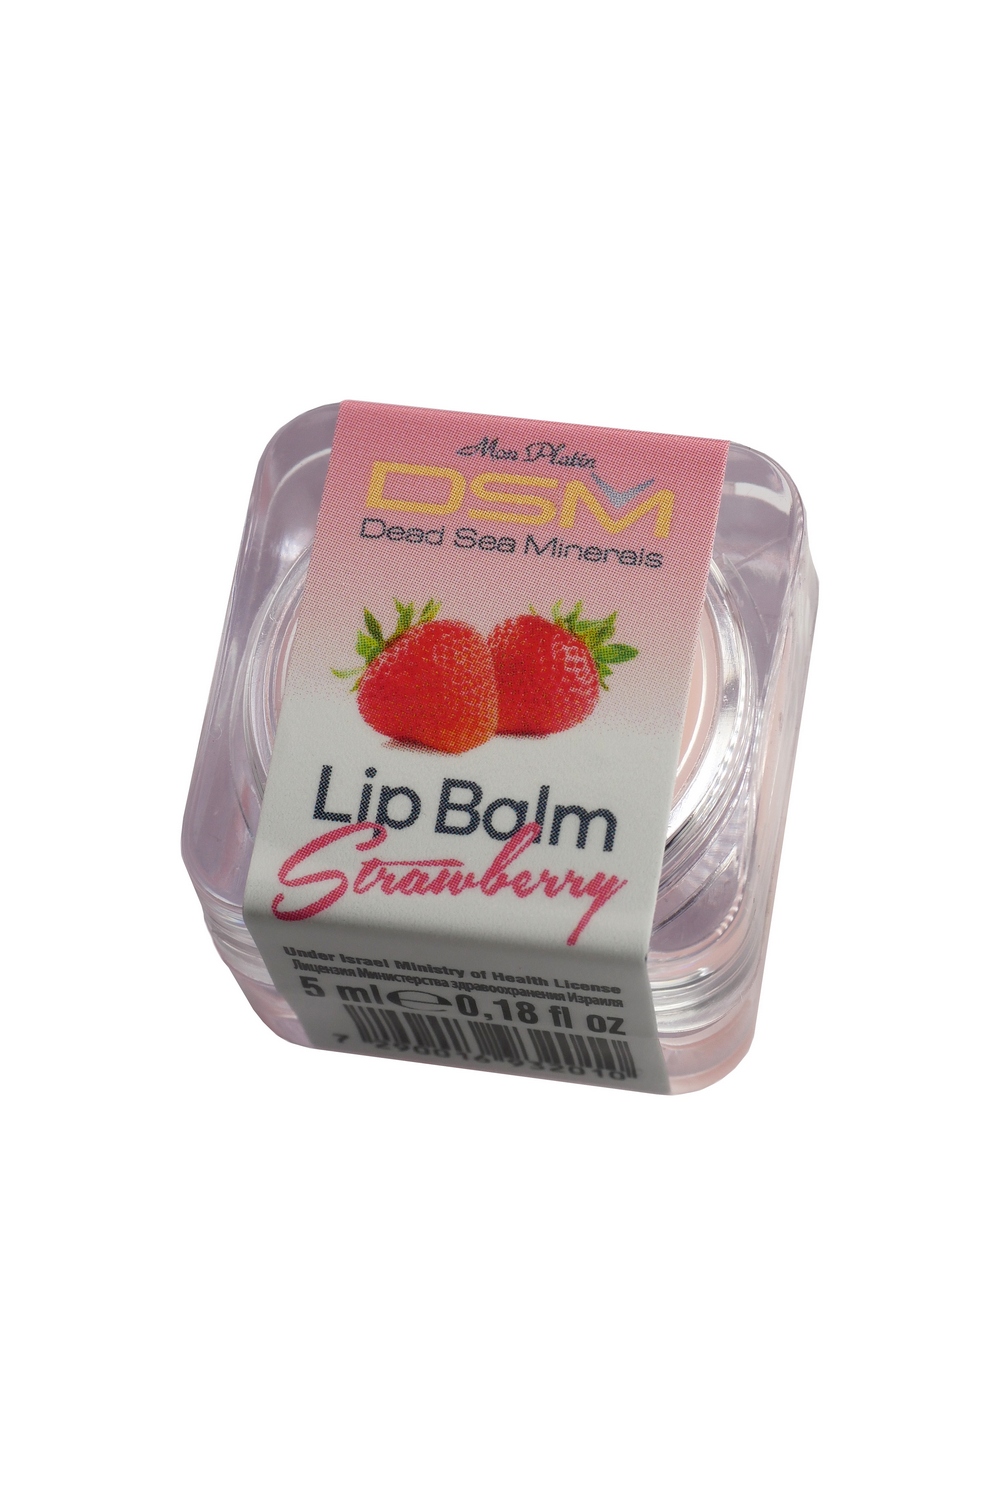 Moisturizing Lip Balm Strawberry based on Coconut & Shea butter